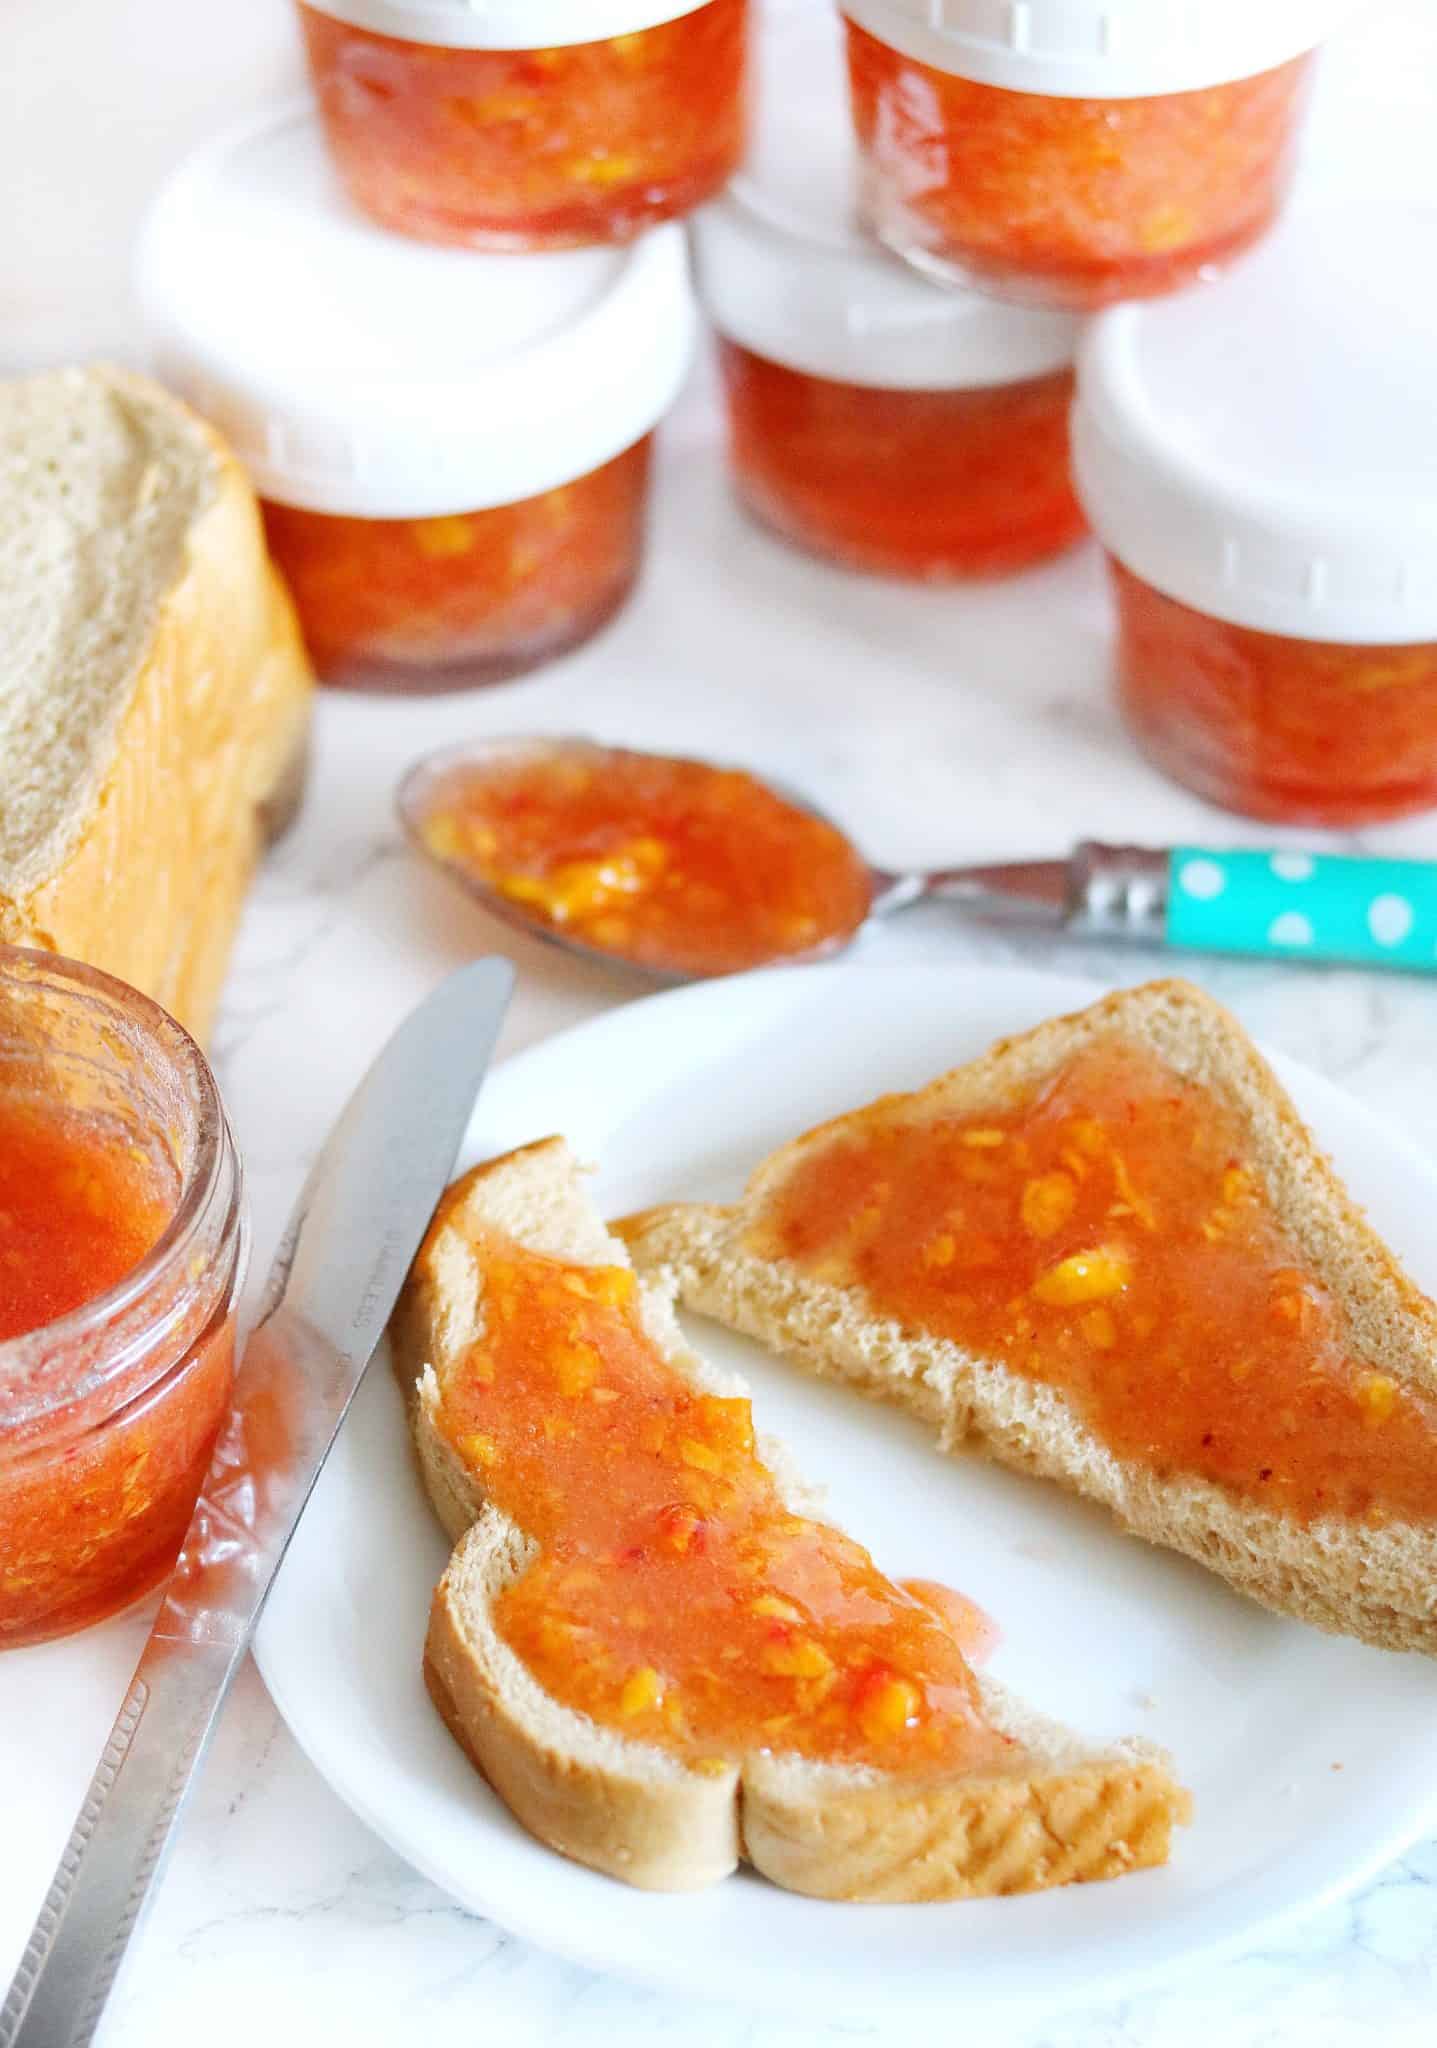 peach jam spread on toast.